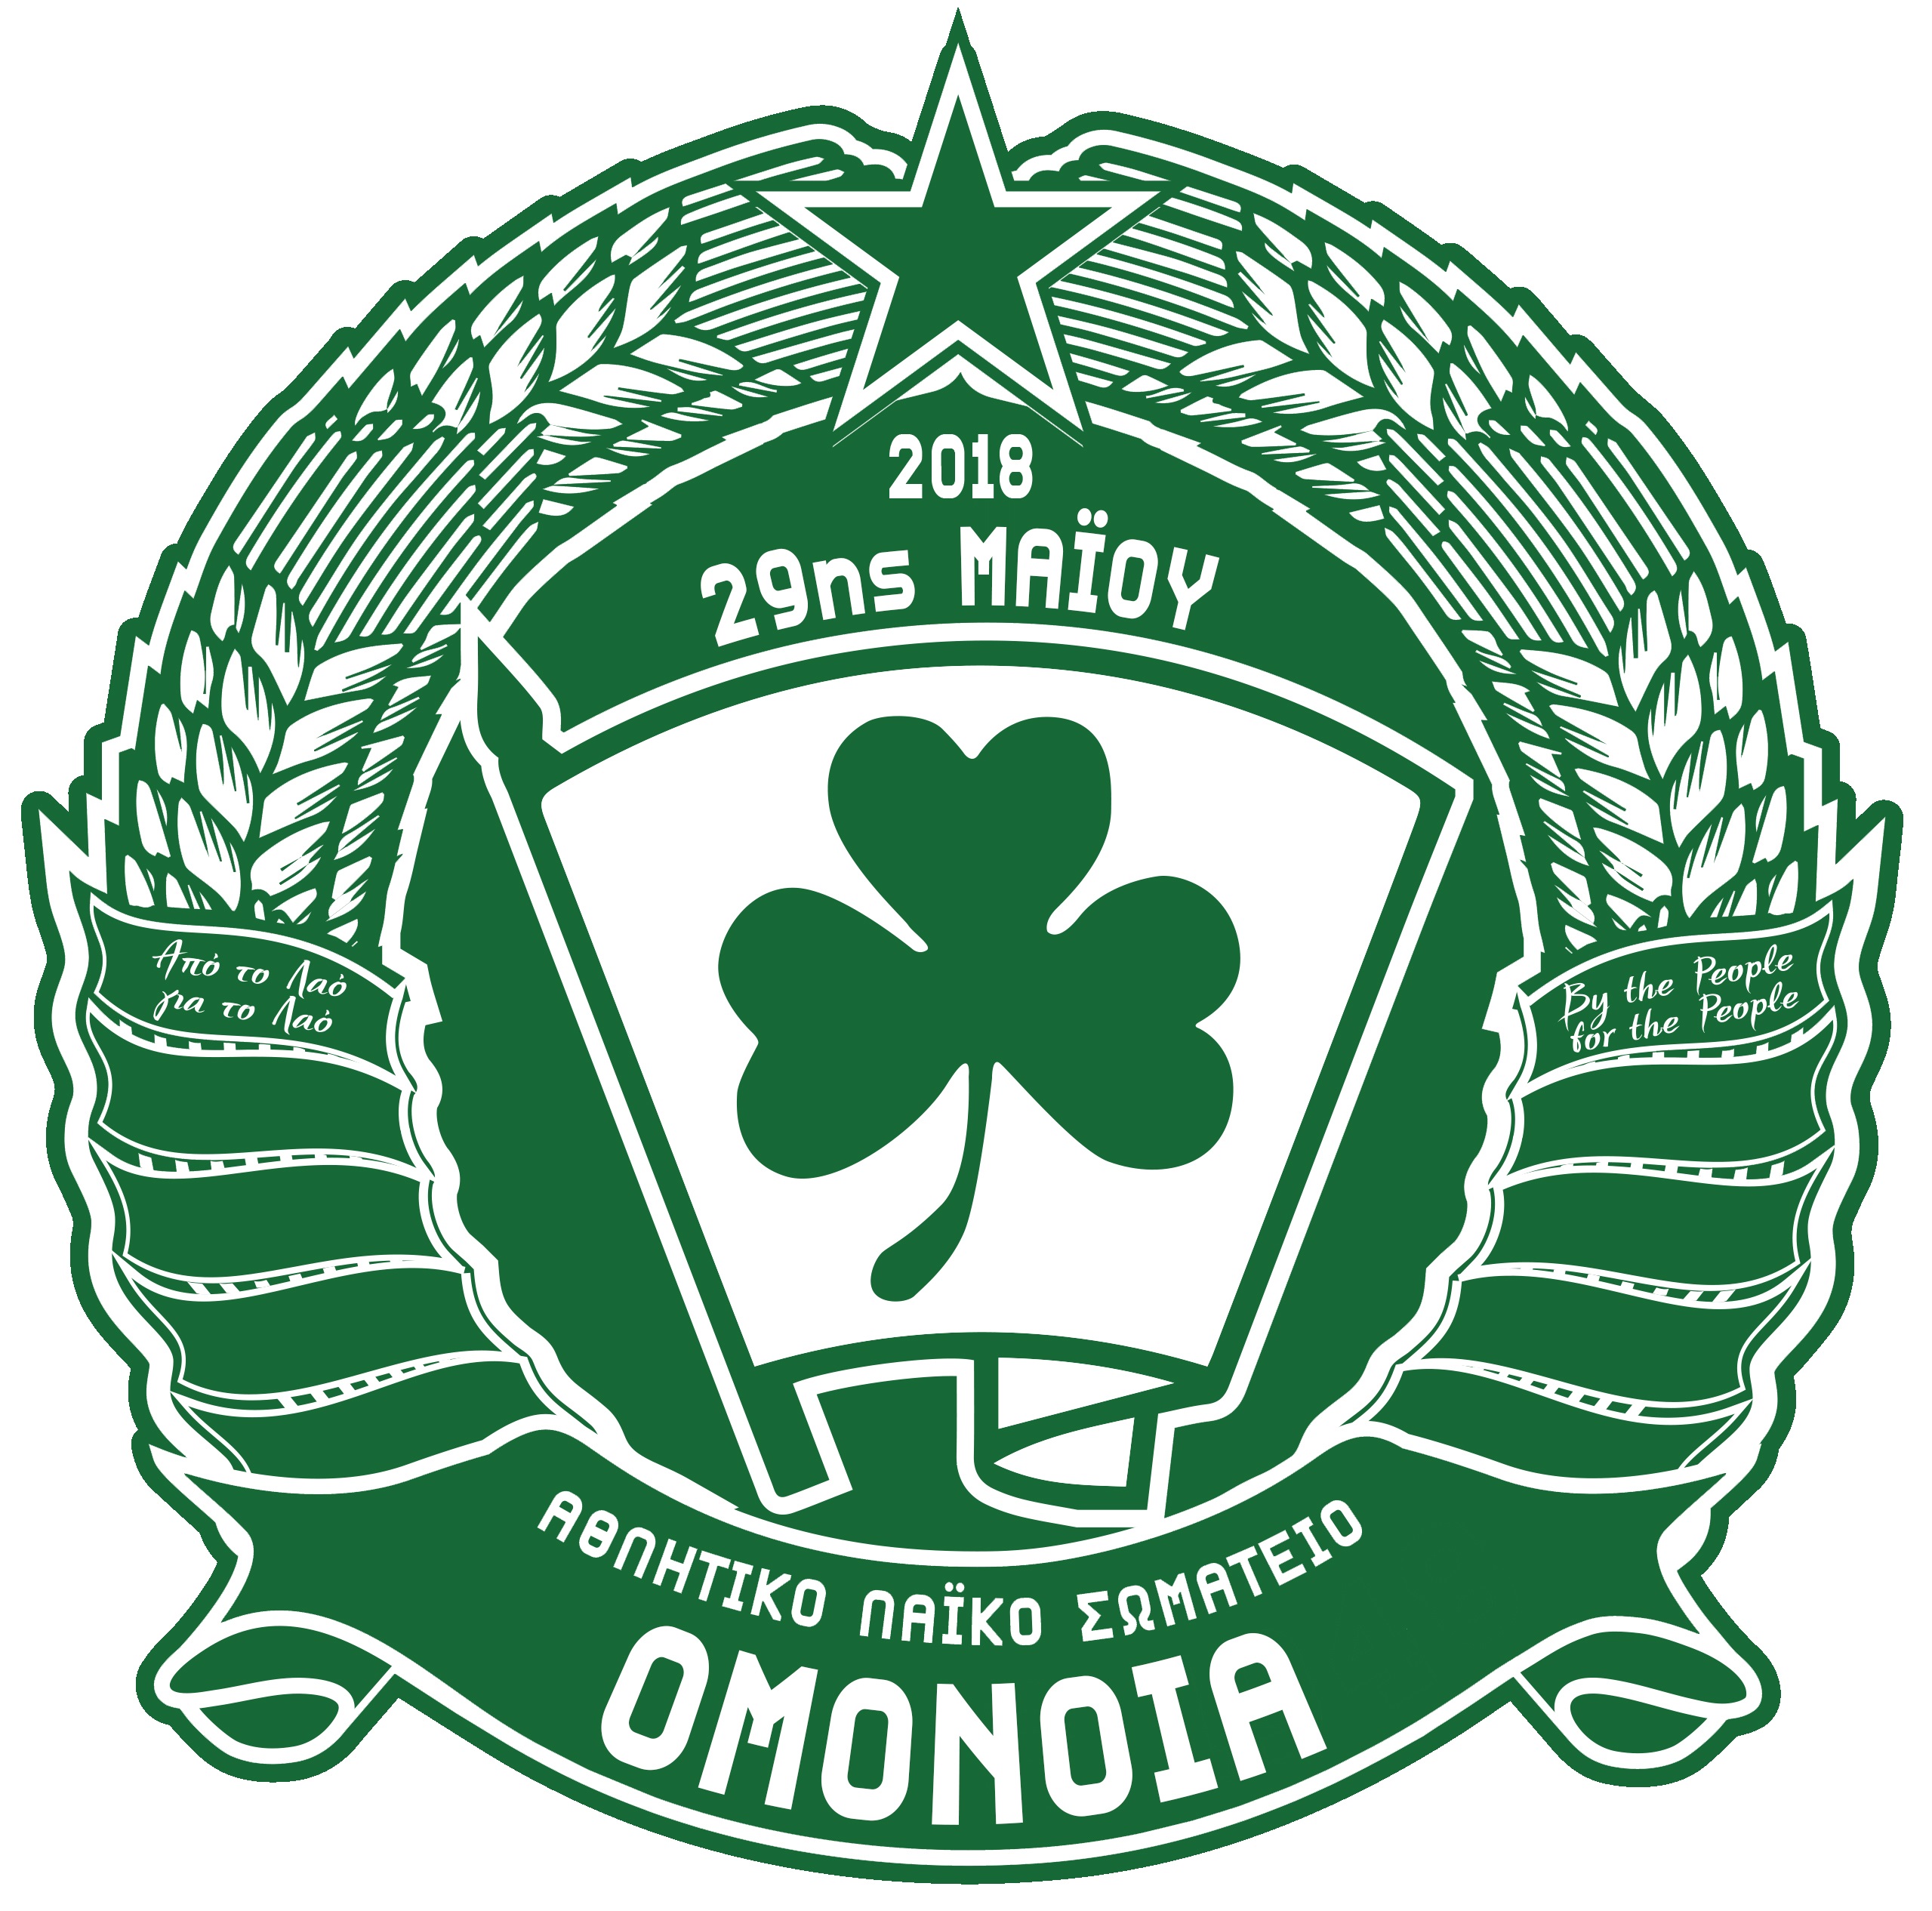 Omonia 29th May